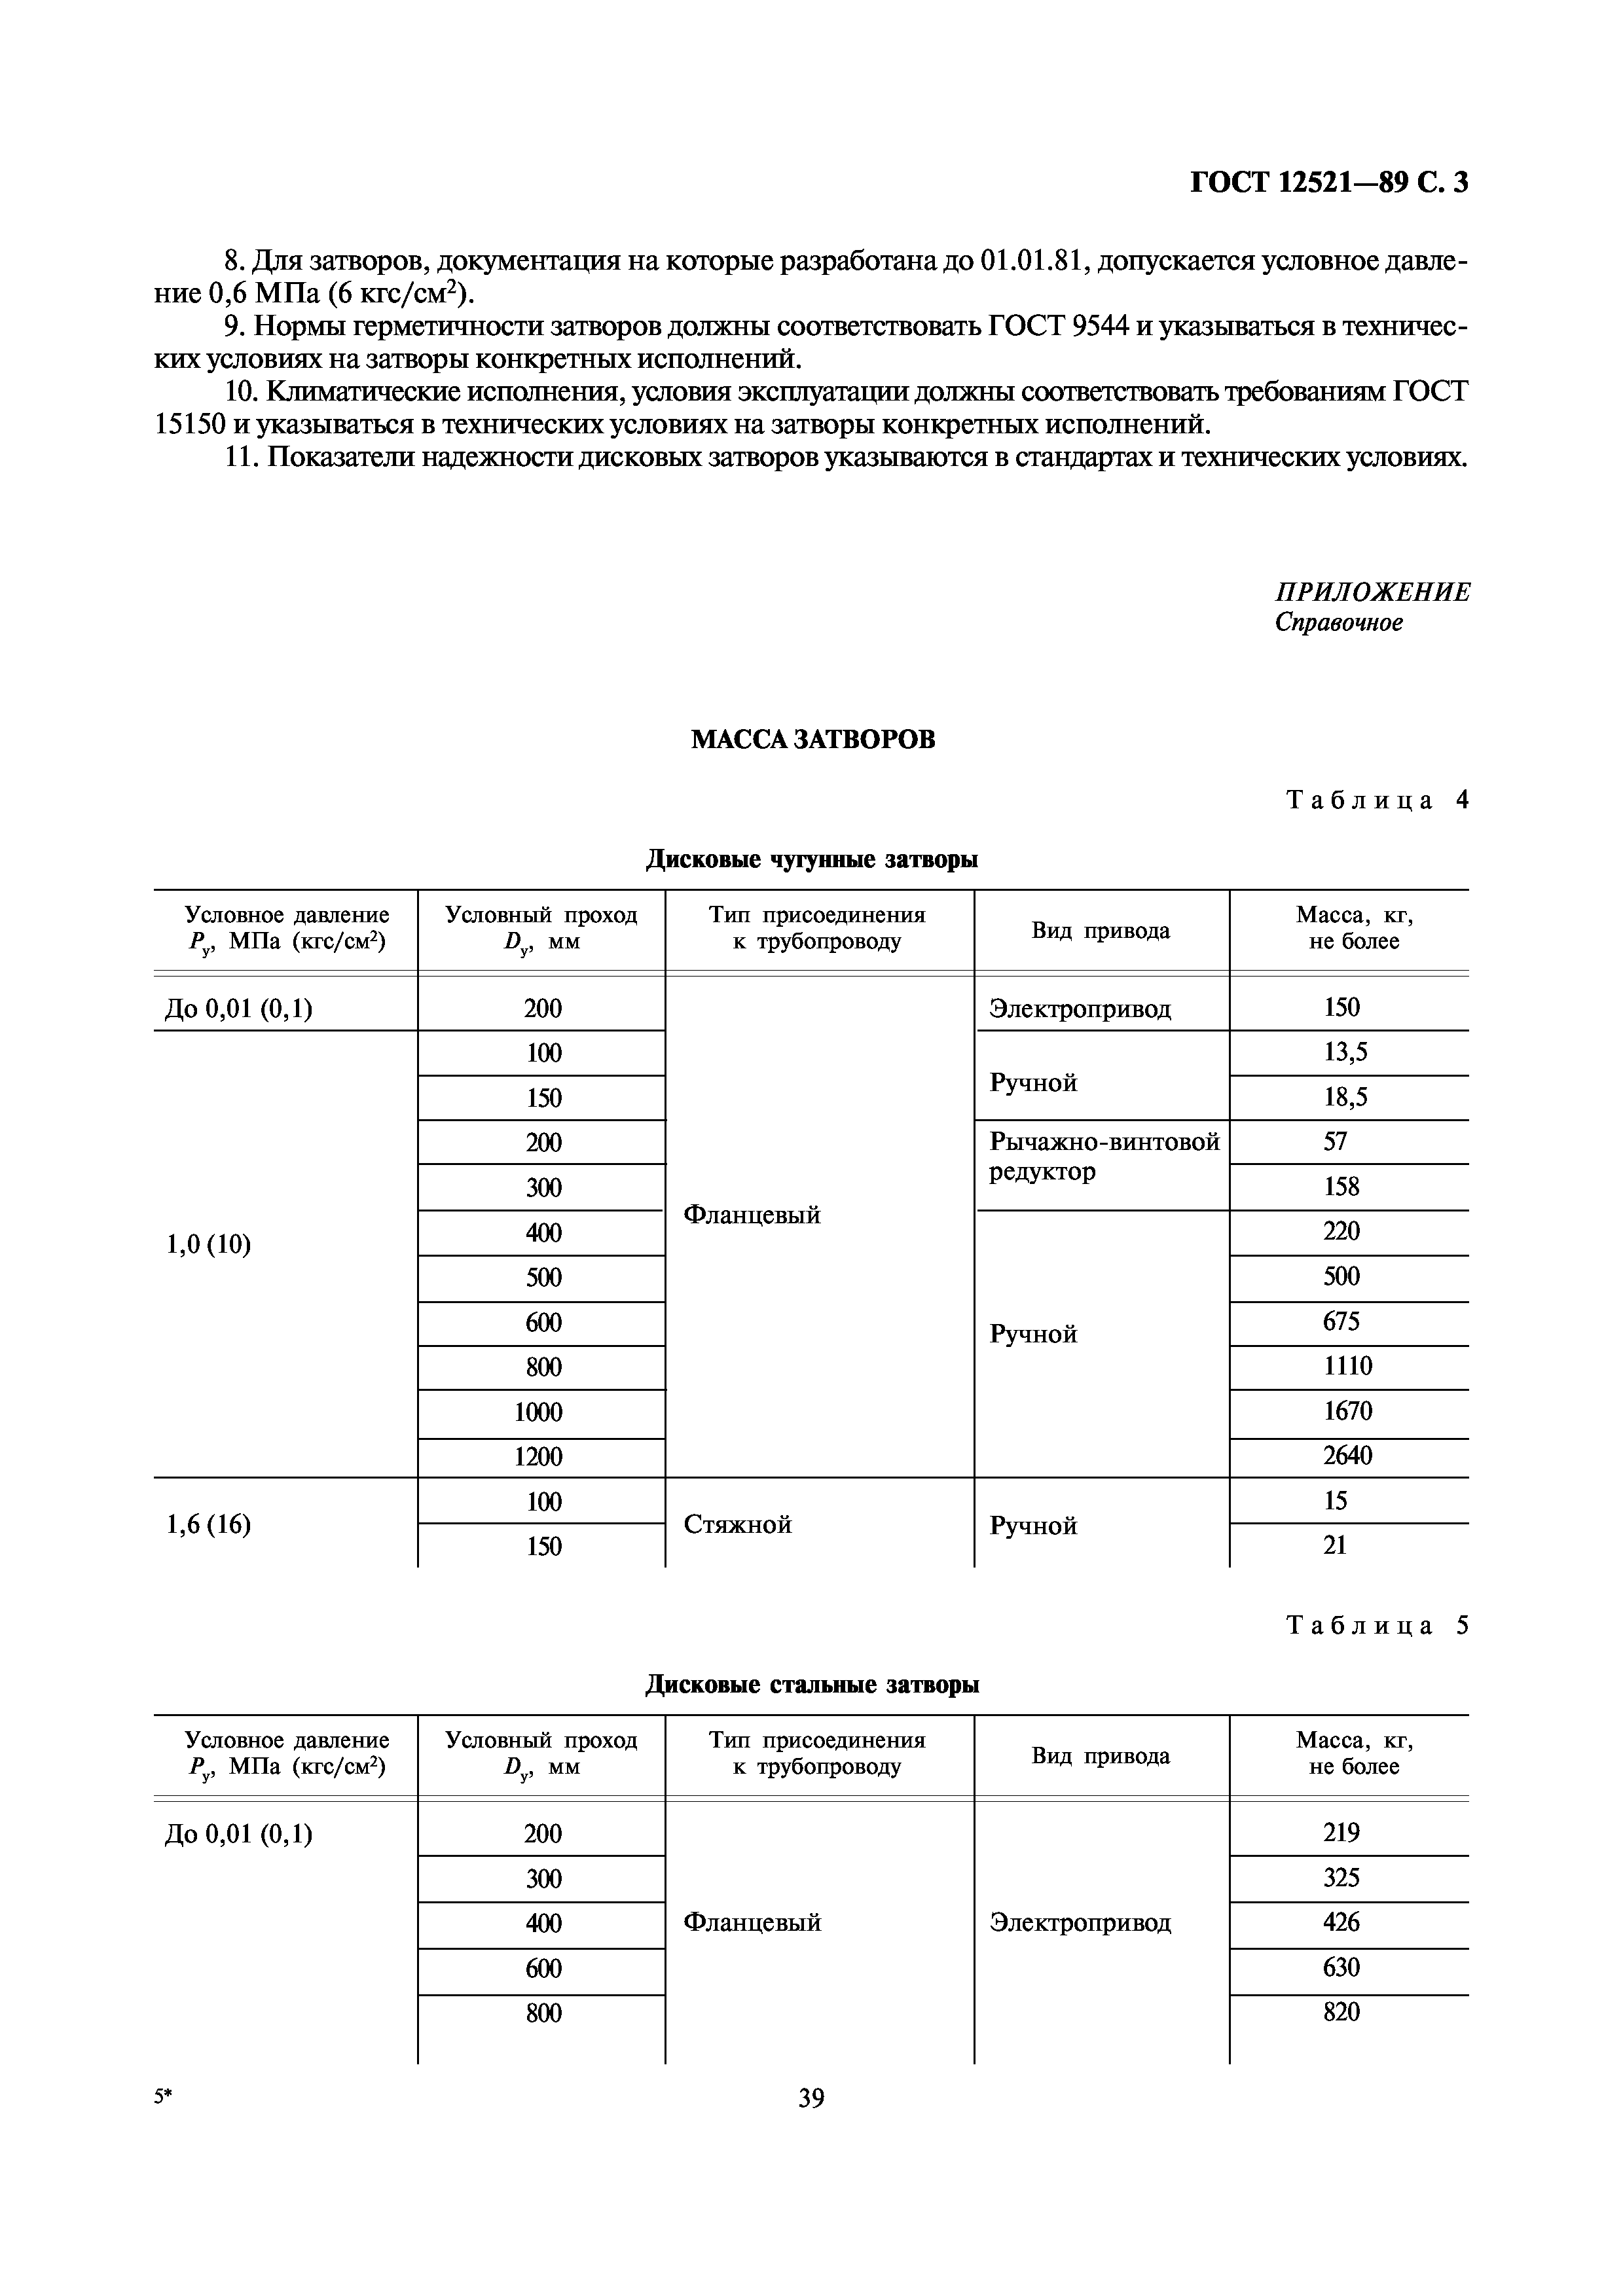 Таблица затворов стандартов